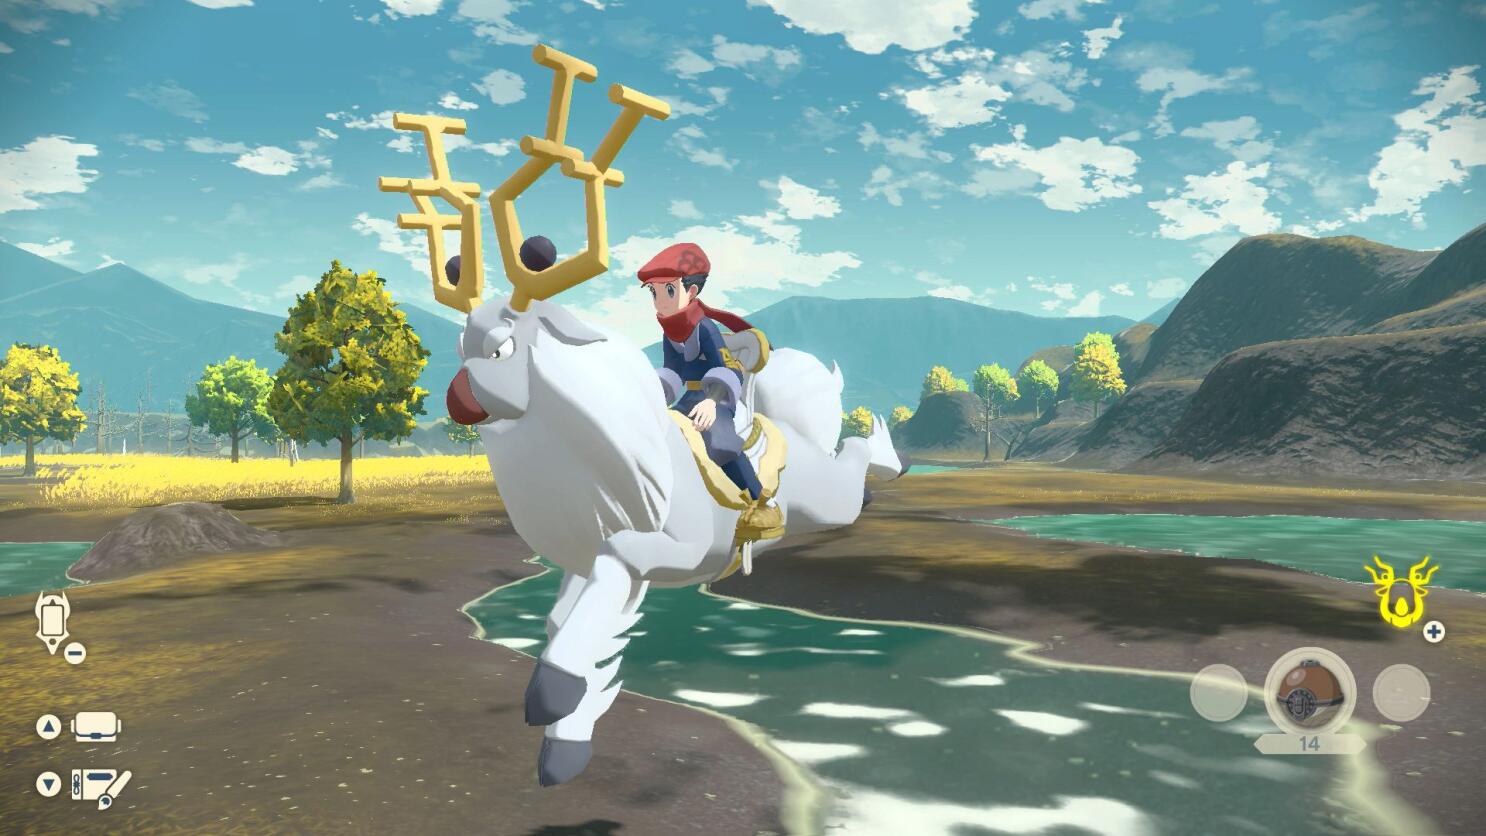 Pokémon Legends: Arceus - Plugged In